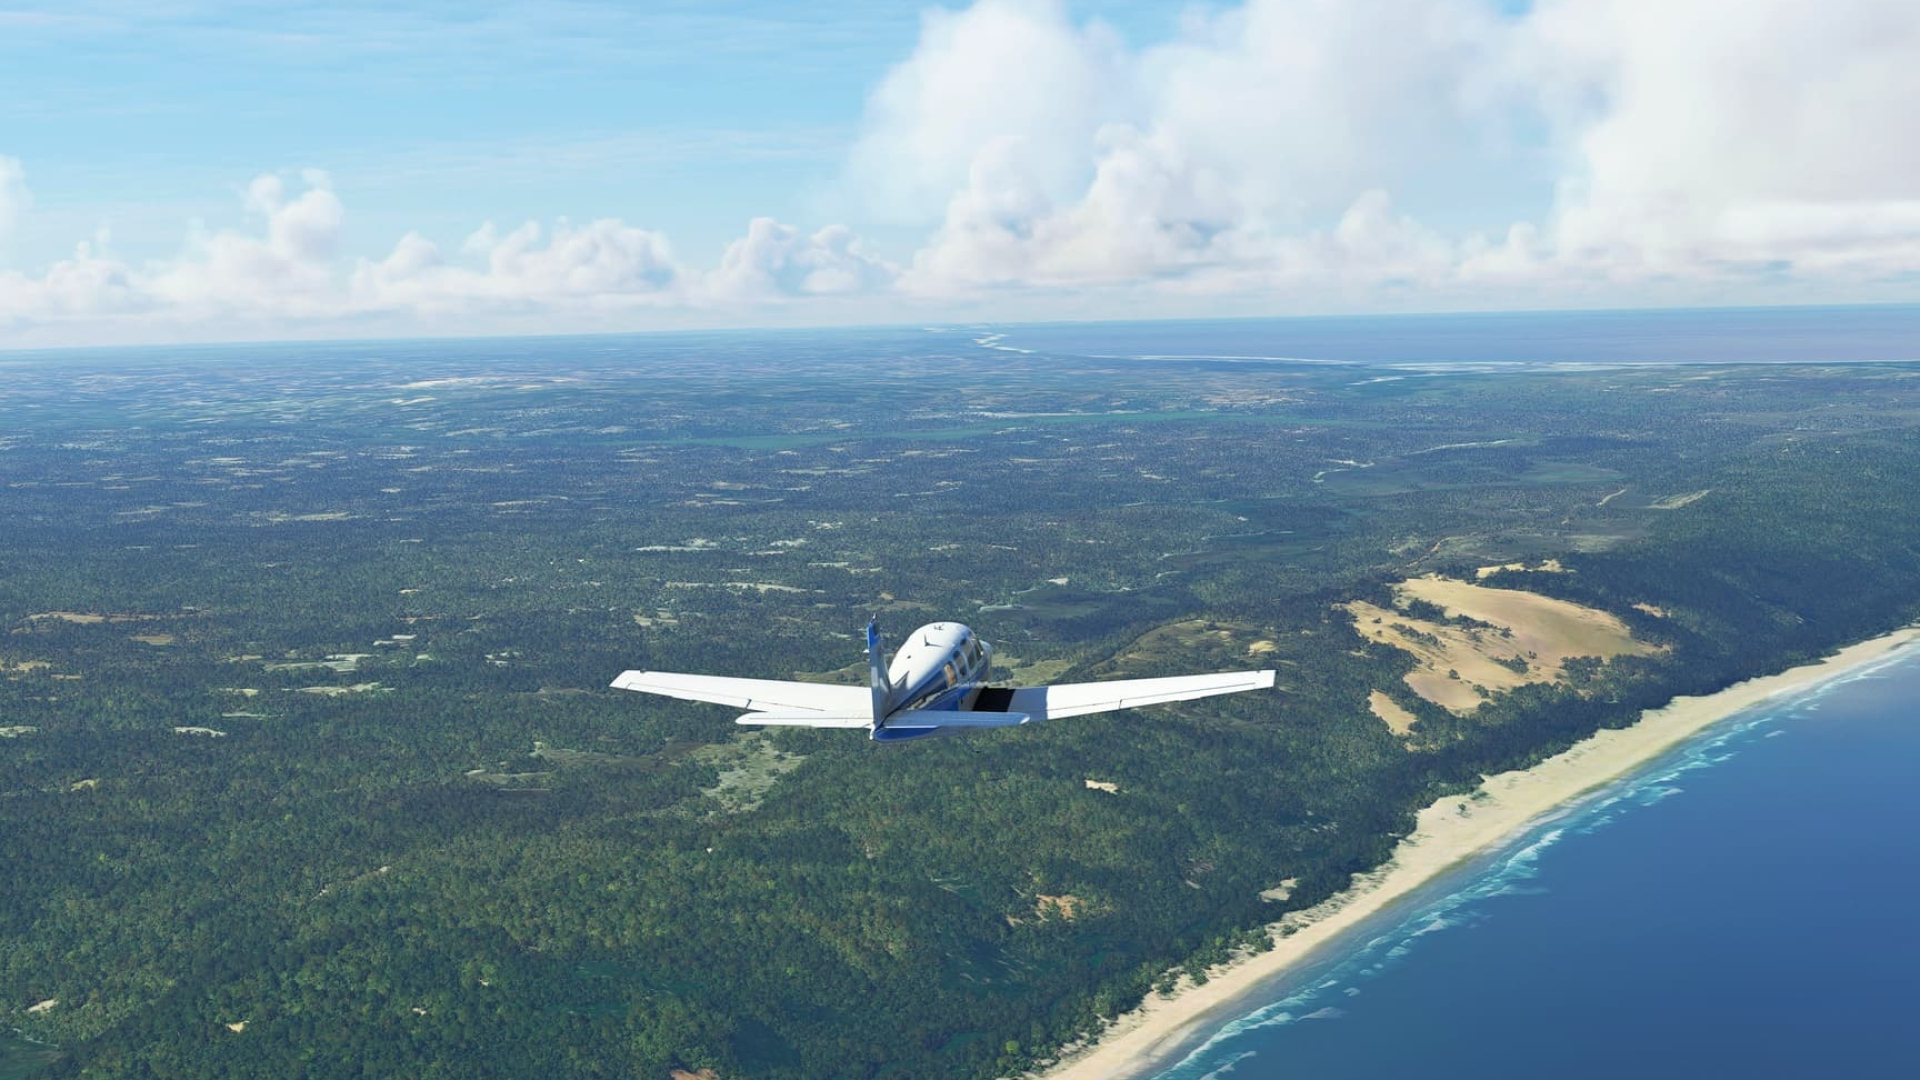 Mozambique coast, Aerial views, Stunning landscapes, Flight simulator experience, 1920x1080 Full HD Desktop